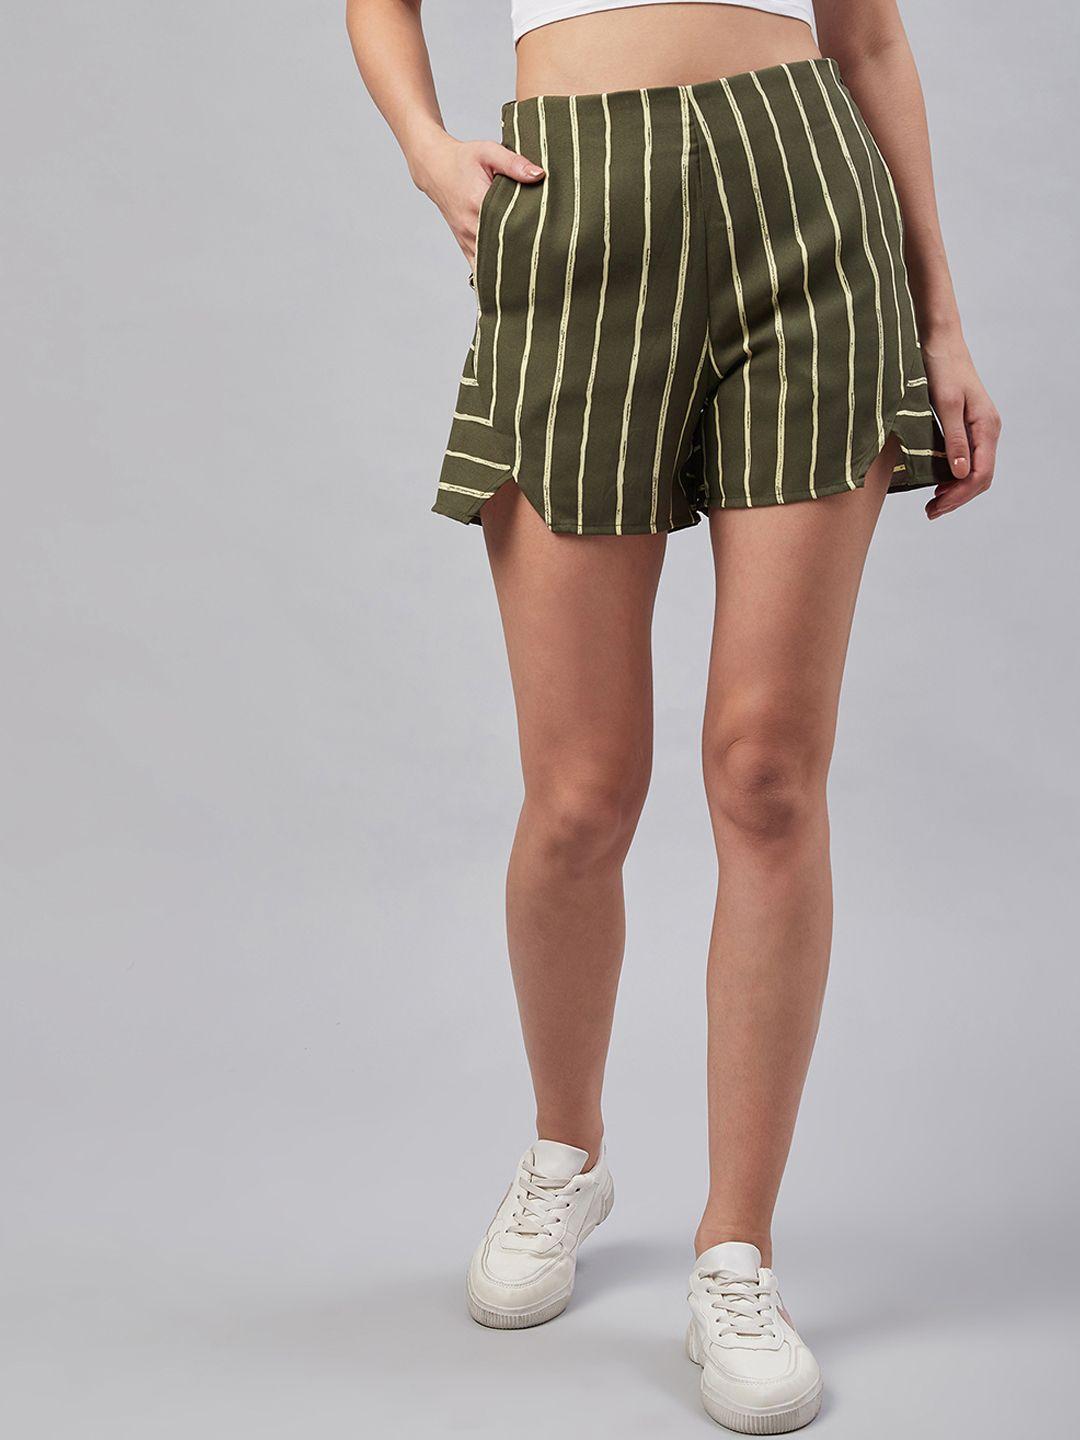 Marie Claire Women Olive Green & Beige Striped Regular Fit Regular Shorts